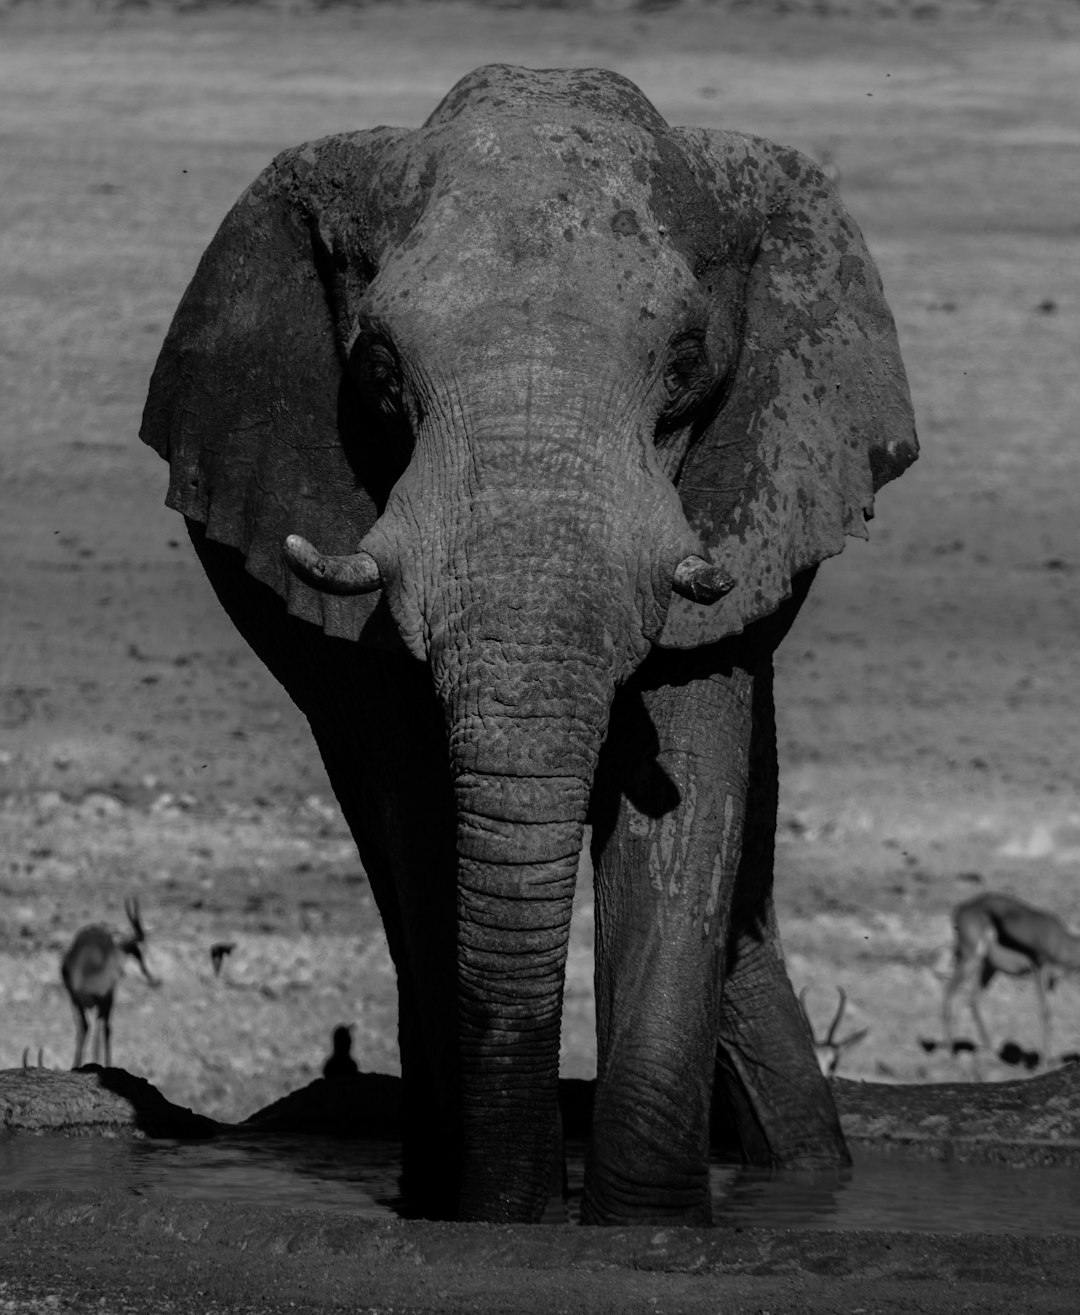 adult elephant on mud near animals